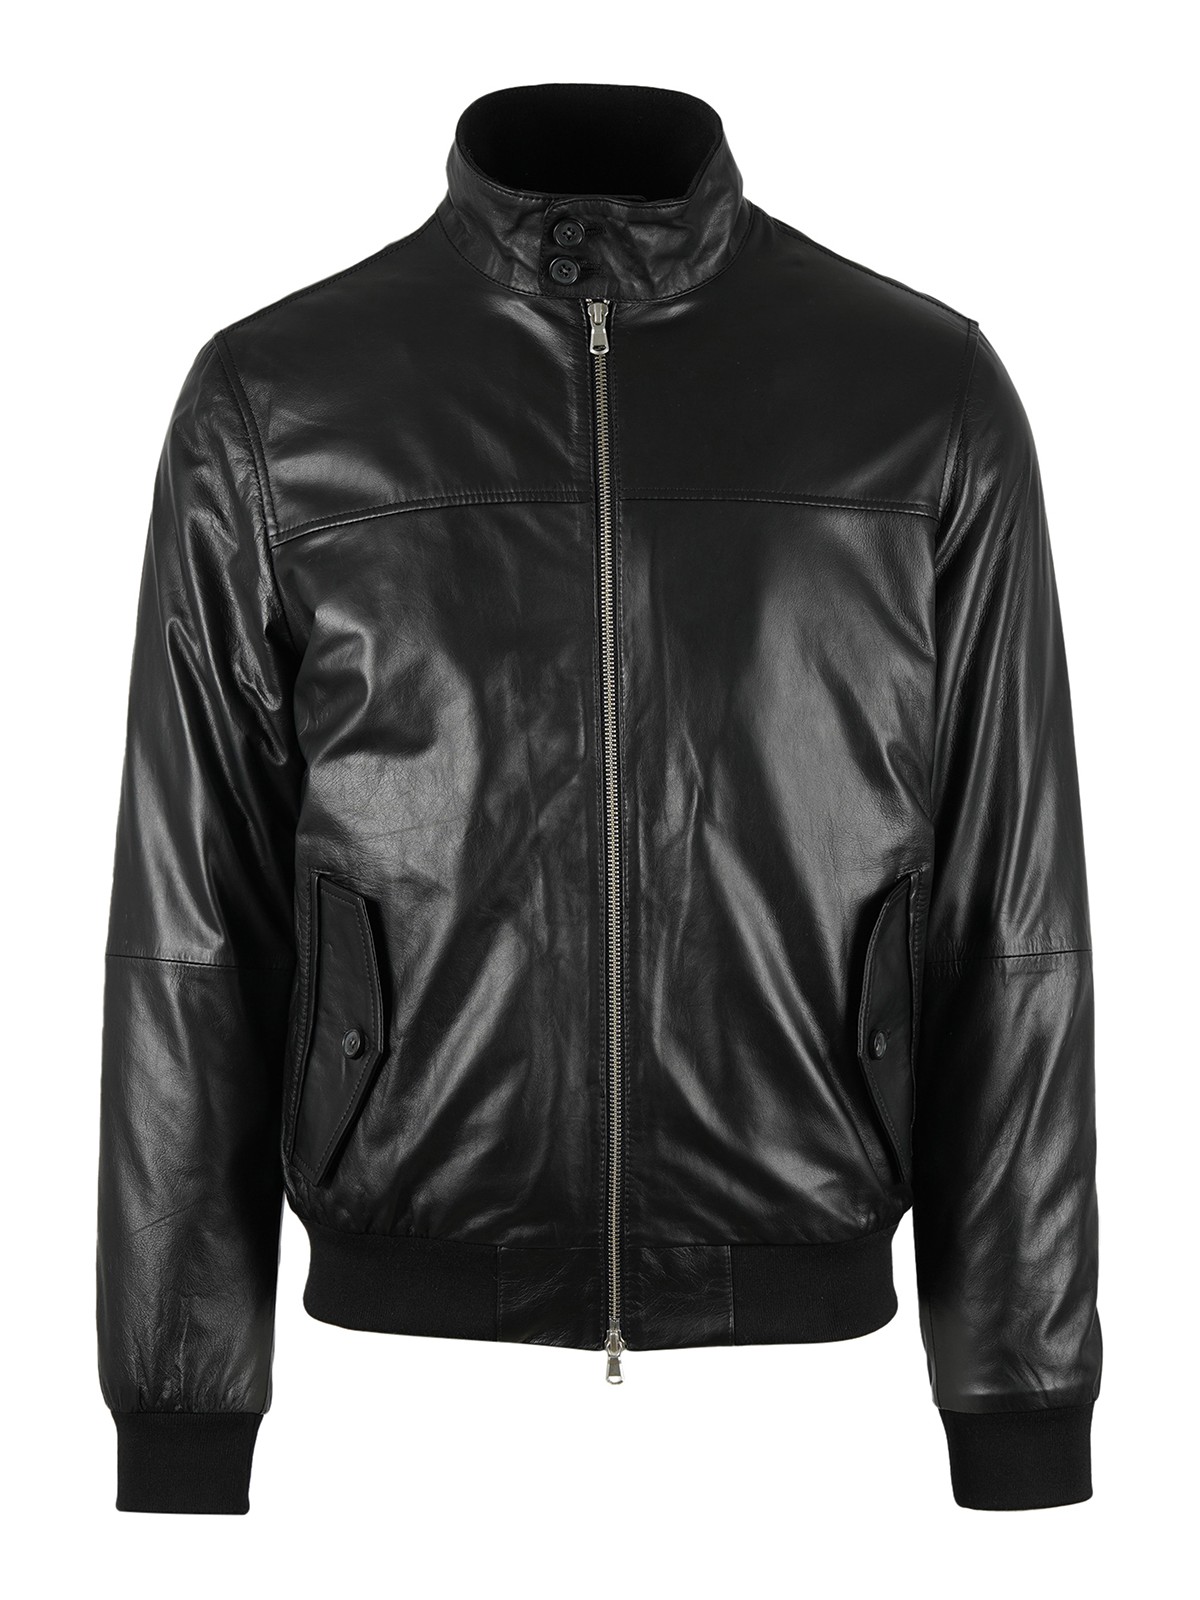 Leather jacket Andrea D'Amico - Man leather jacket - DGU0413999